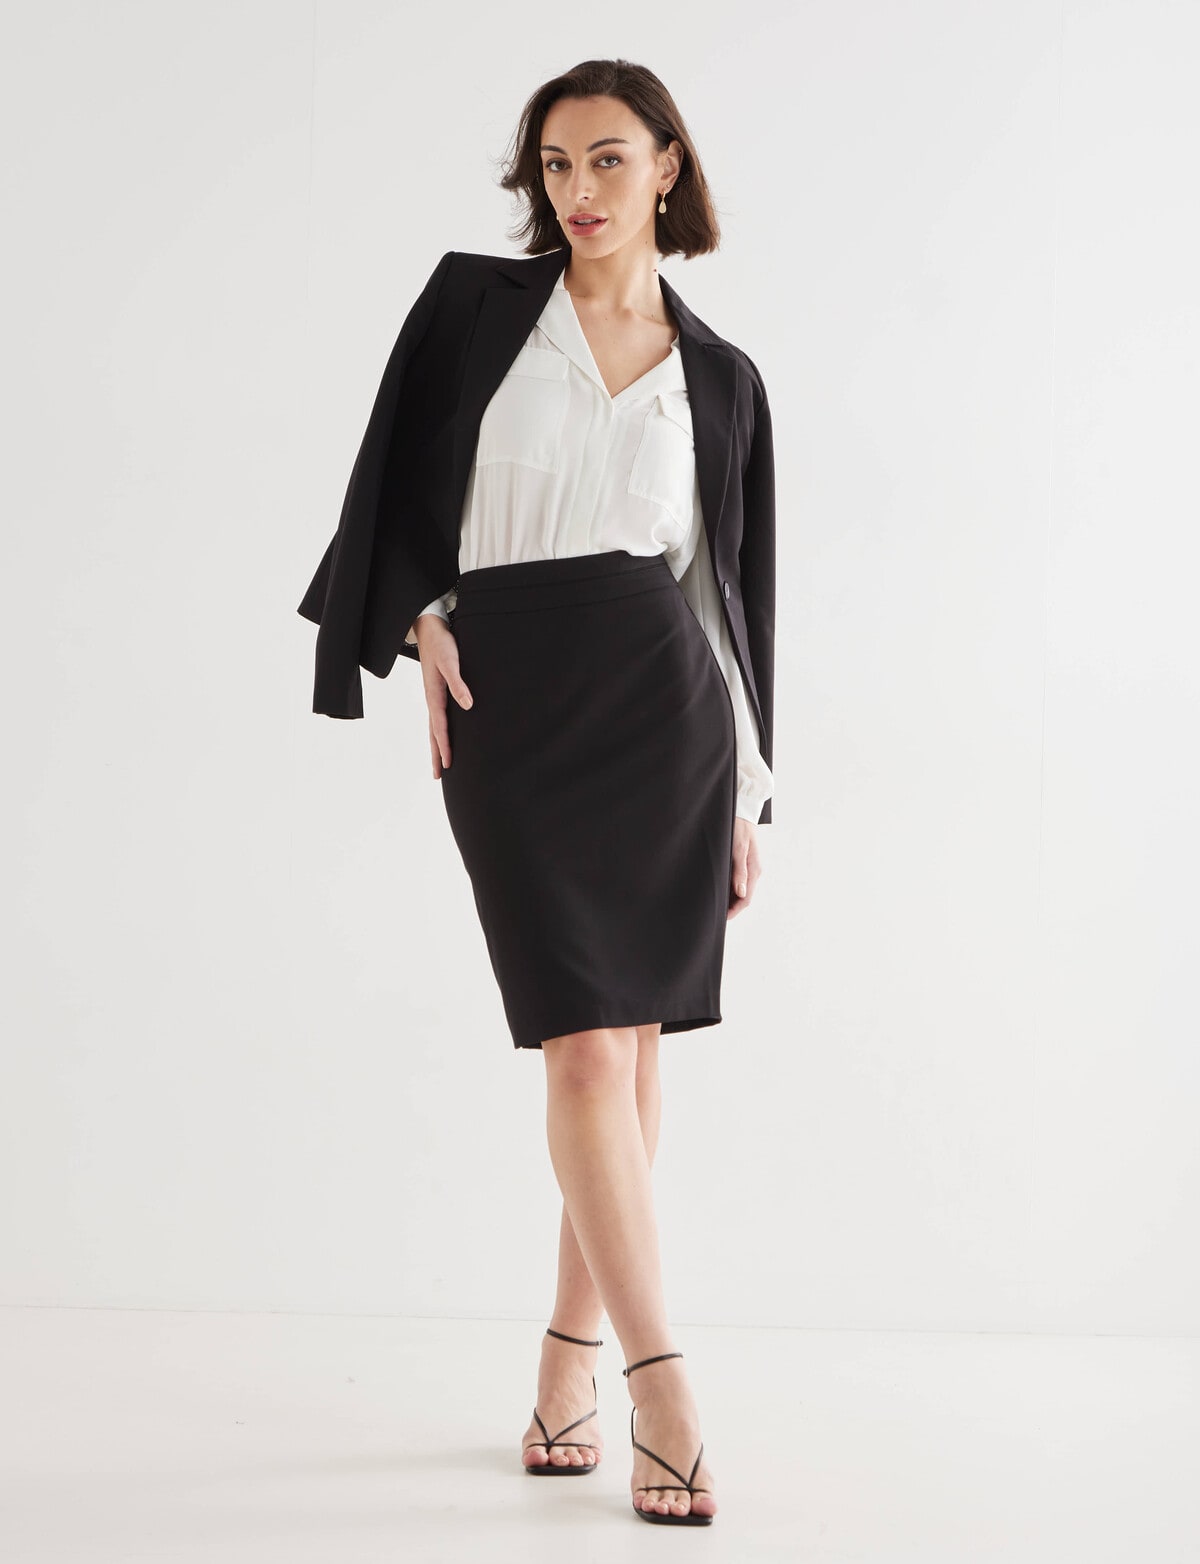 Knee Length High Waist Stretch Pencil Skirt - Black/Small at